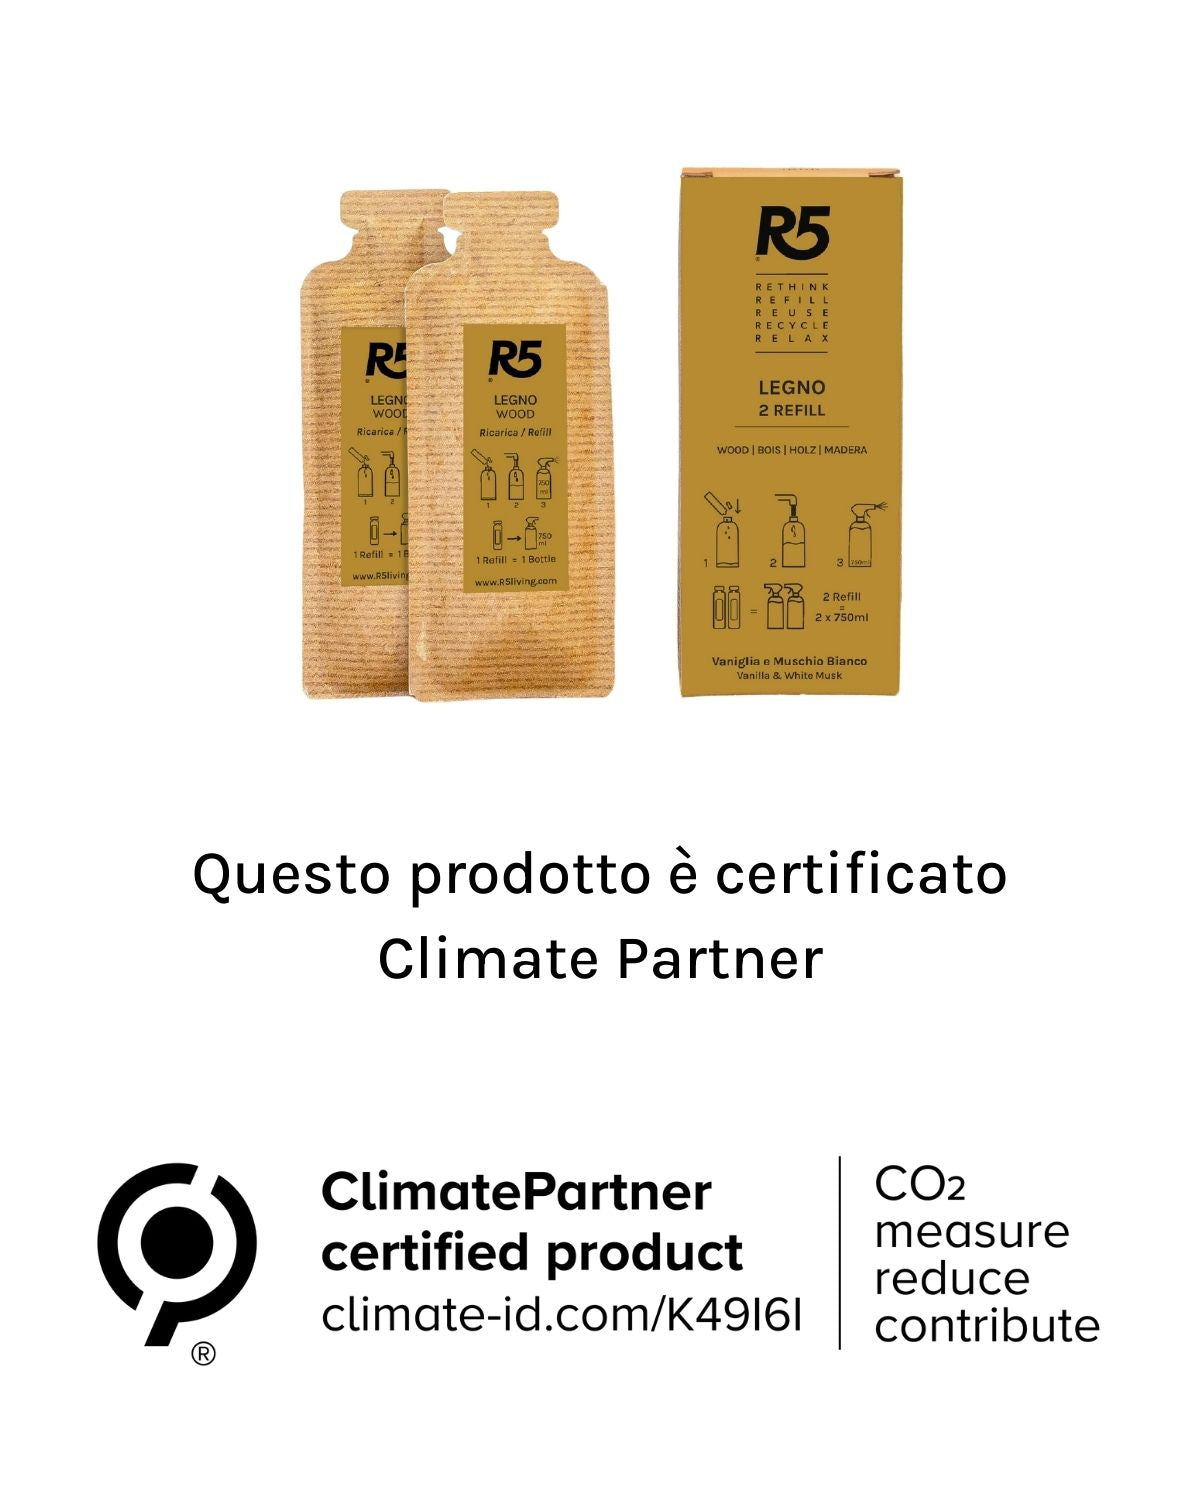 Climate Partner certified refill legno